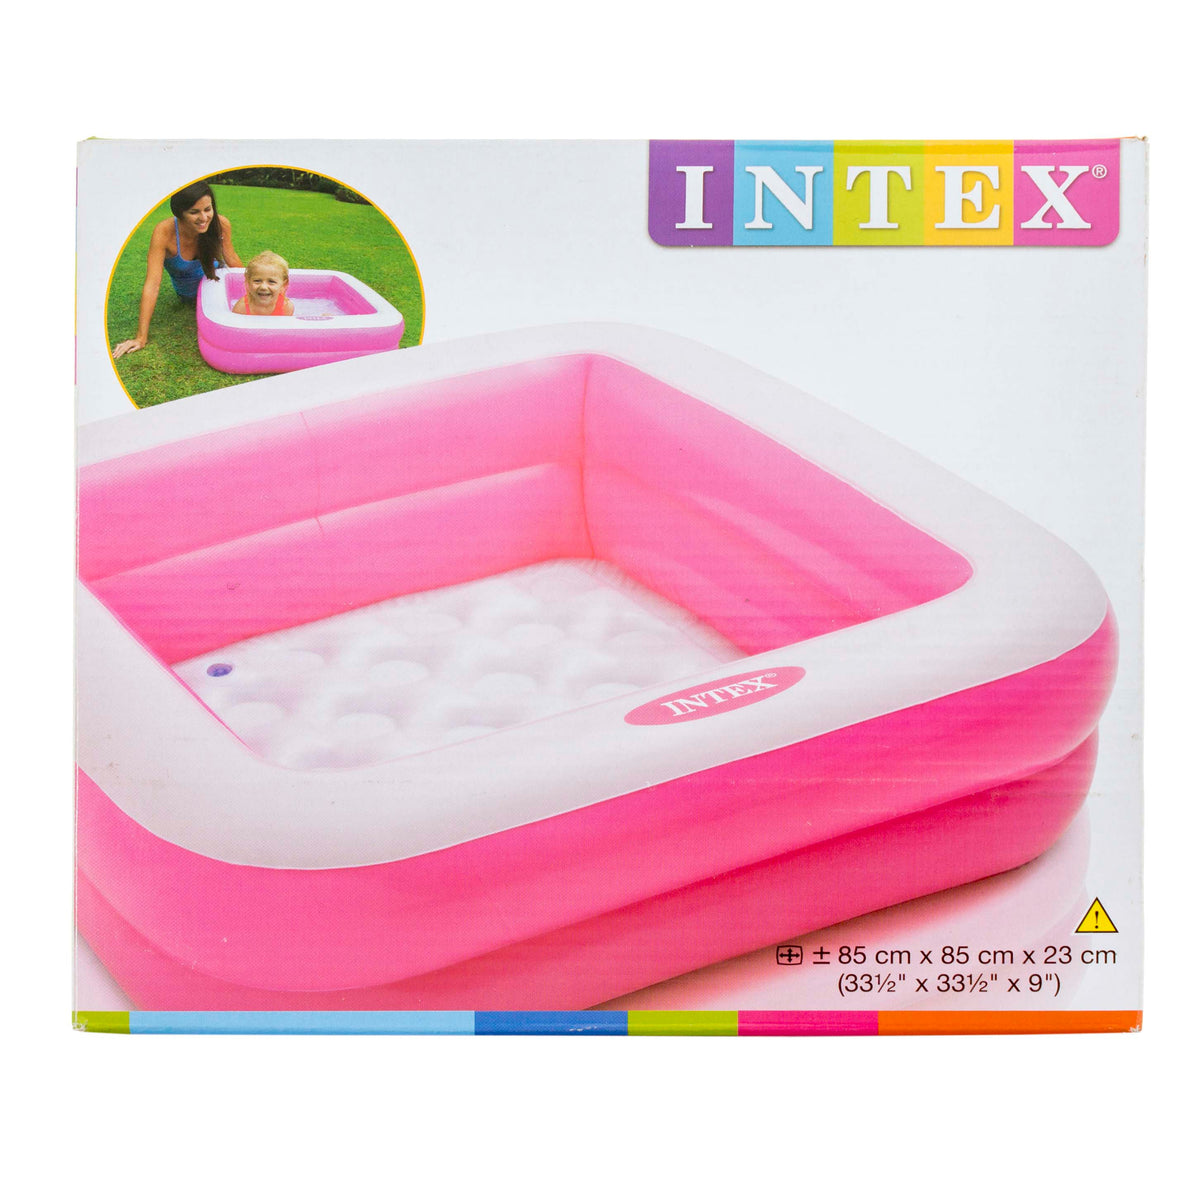 INTEX Play Box Baby Pool ( 33.5" X 33.5" X 9" )